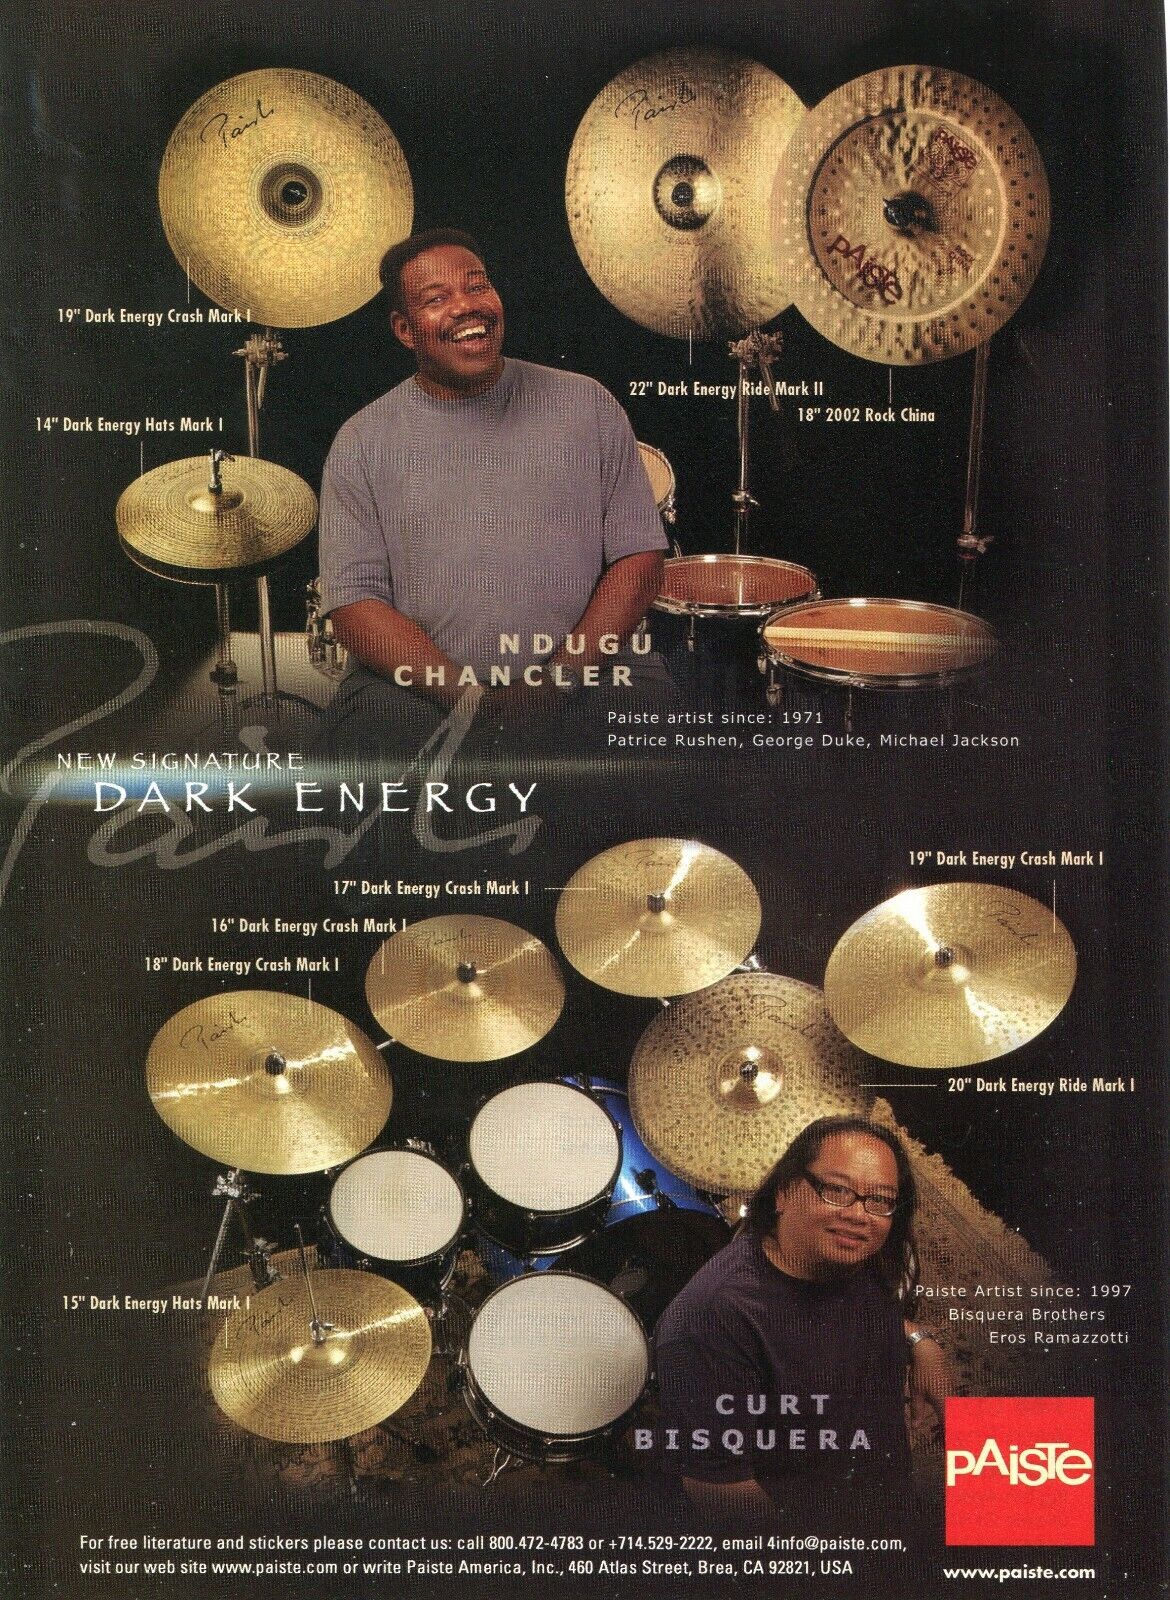 2006 Print Ad of Paiste Dark Energy Drum Cymbal w Ndugu Chancler & Curt Bisquera